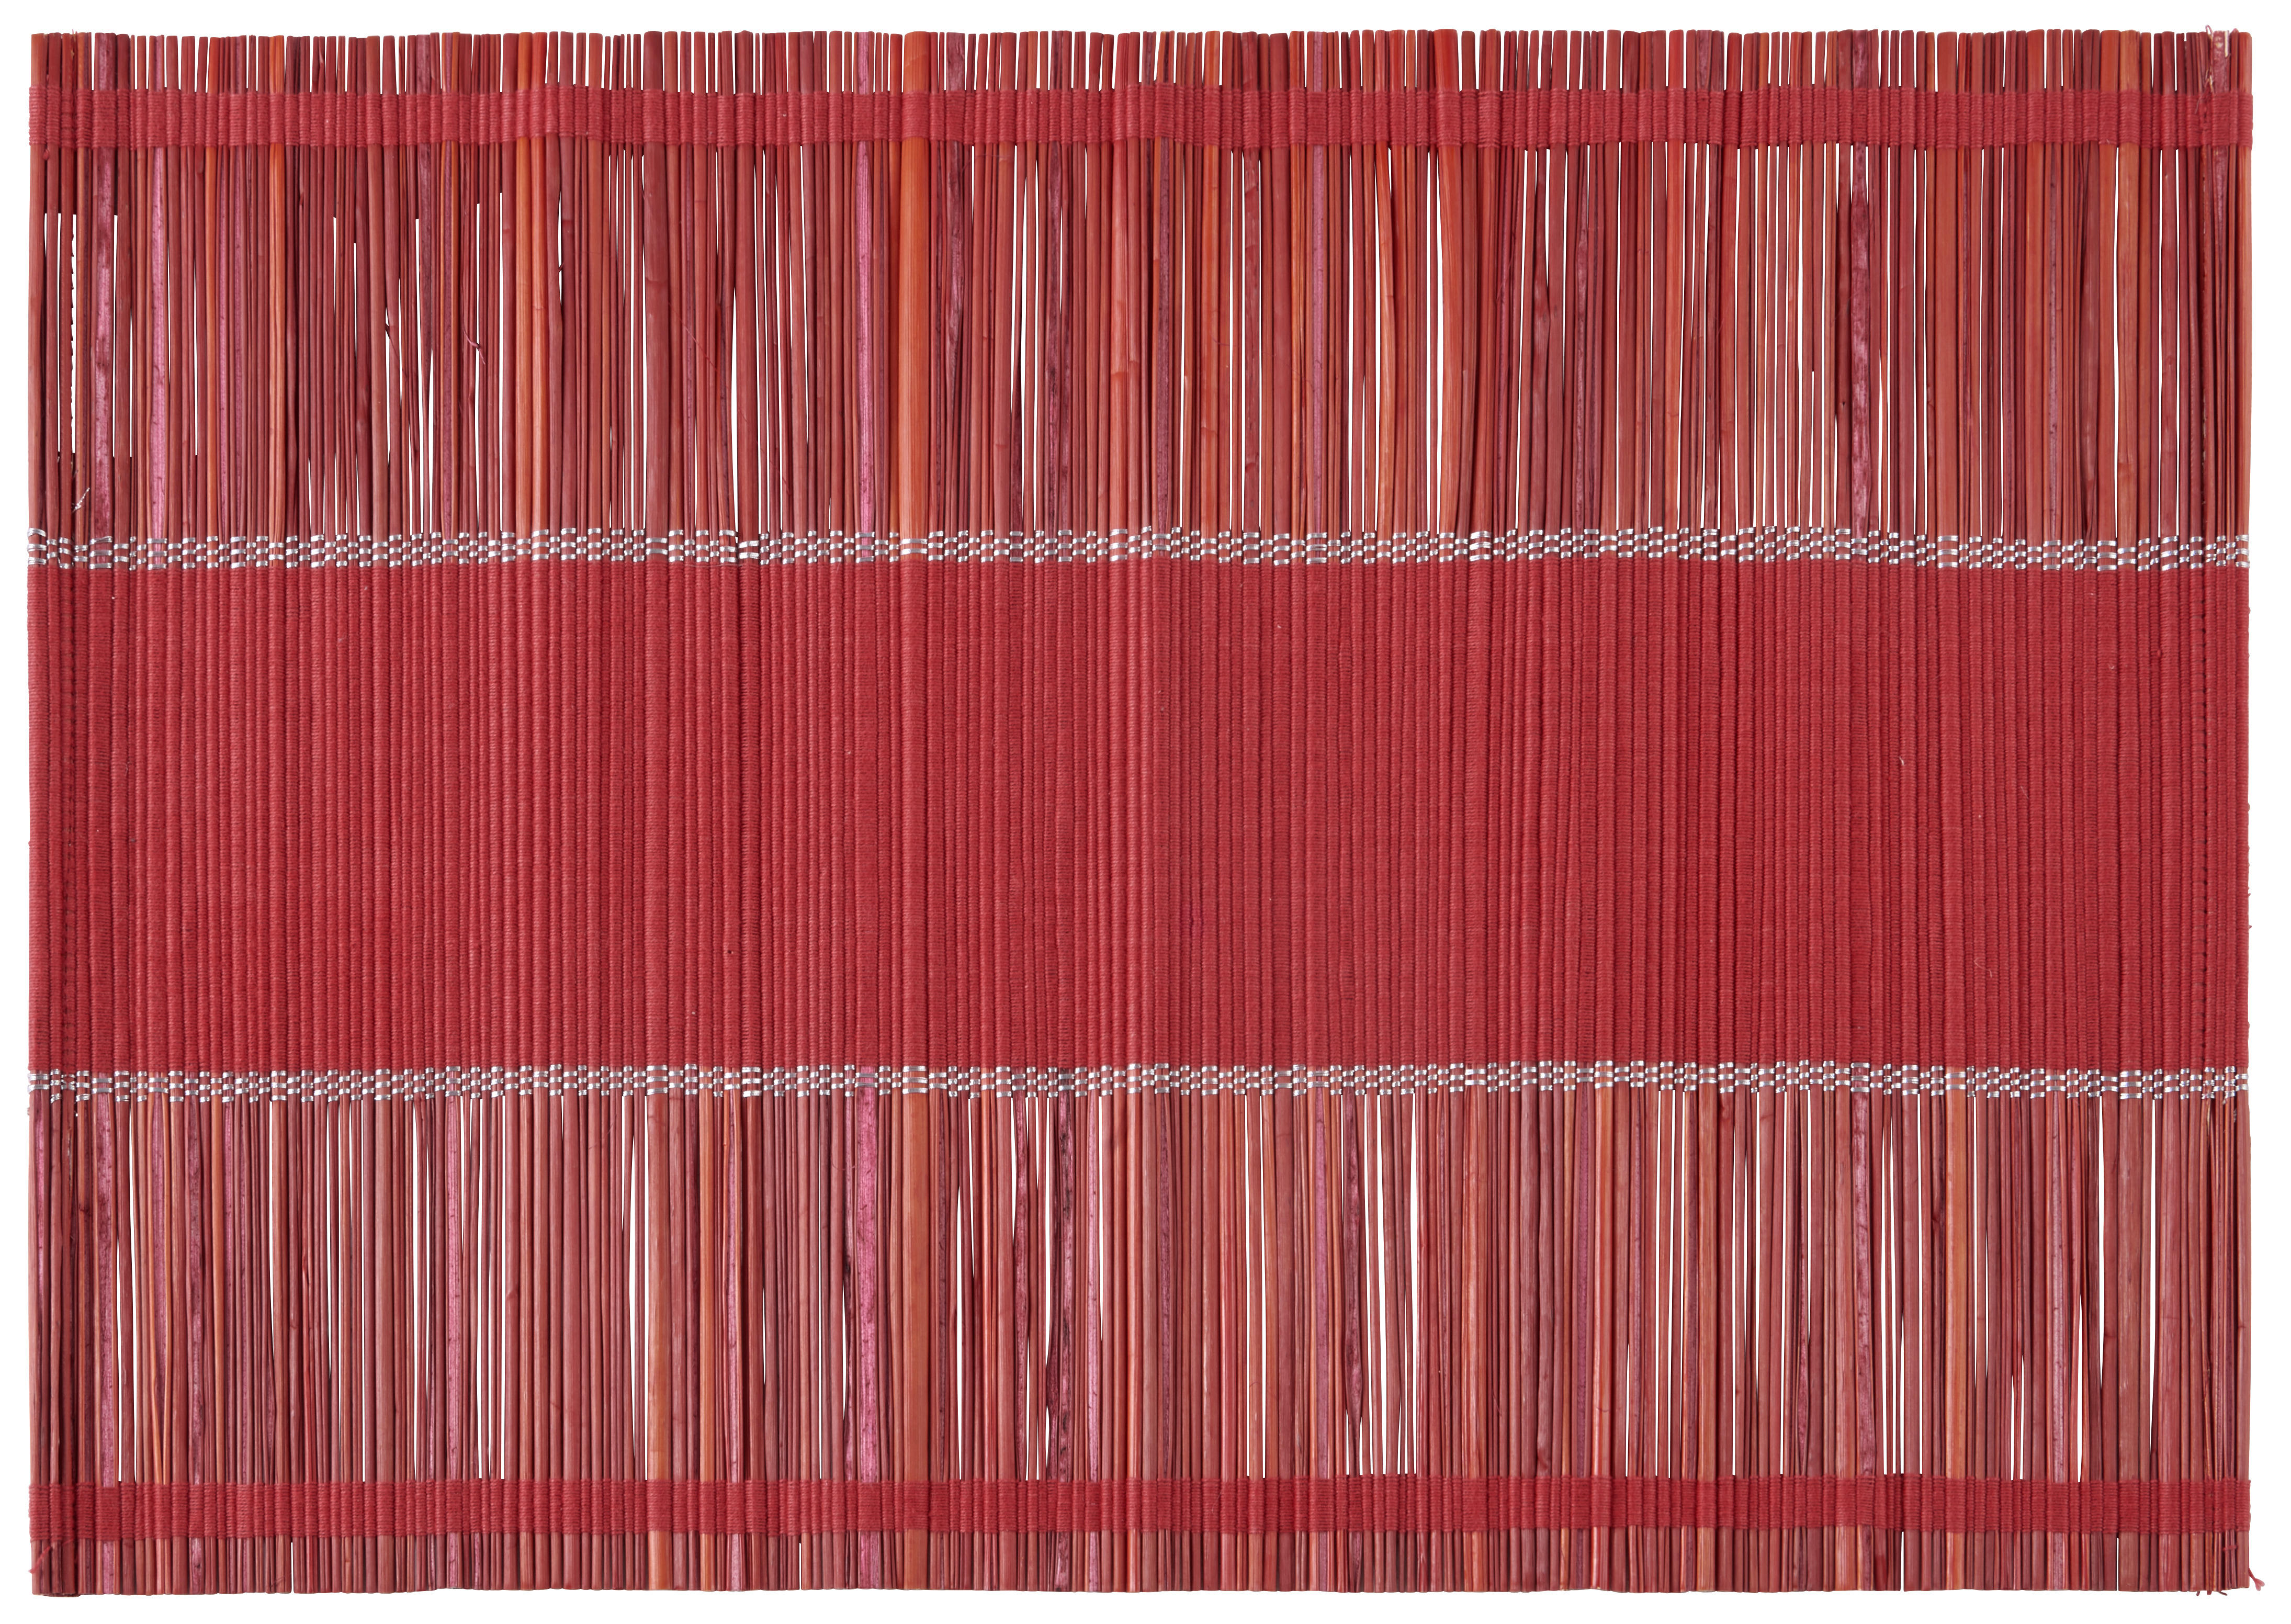 TISCHSET Textil Rot 33/48 cm  - Rot, KONVENTIONELL, Textil (33/48cm) - Esposa